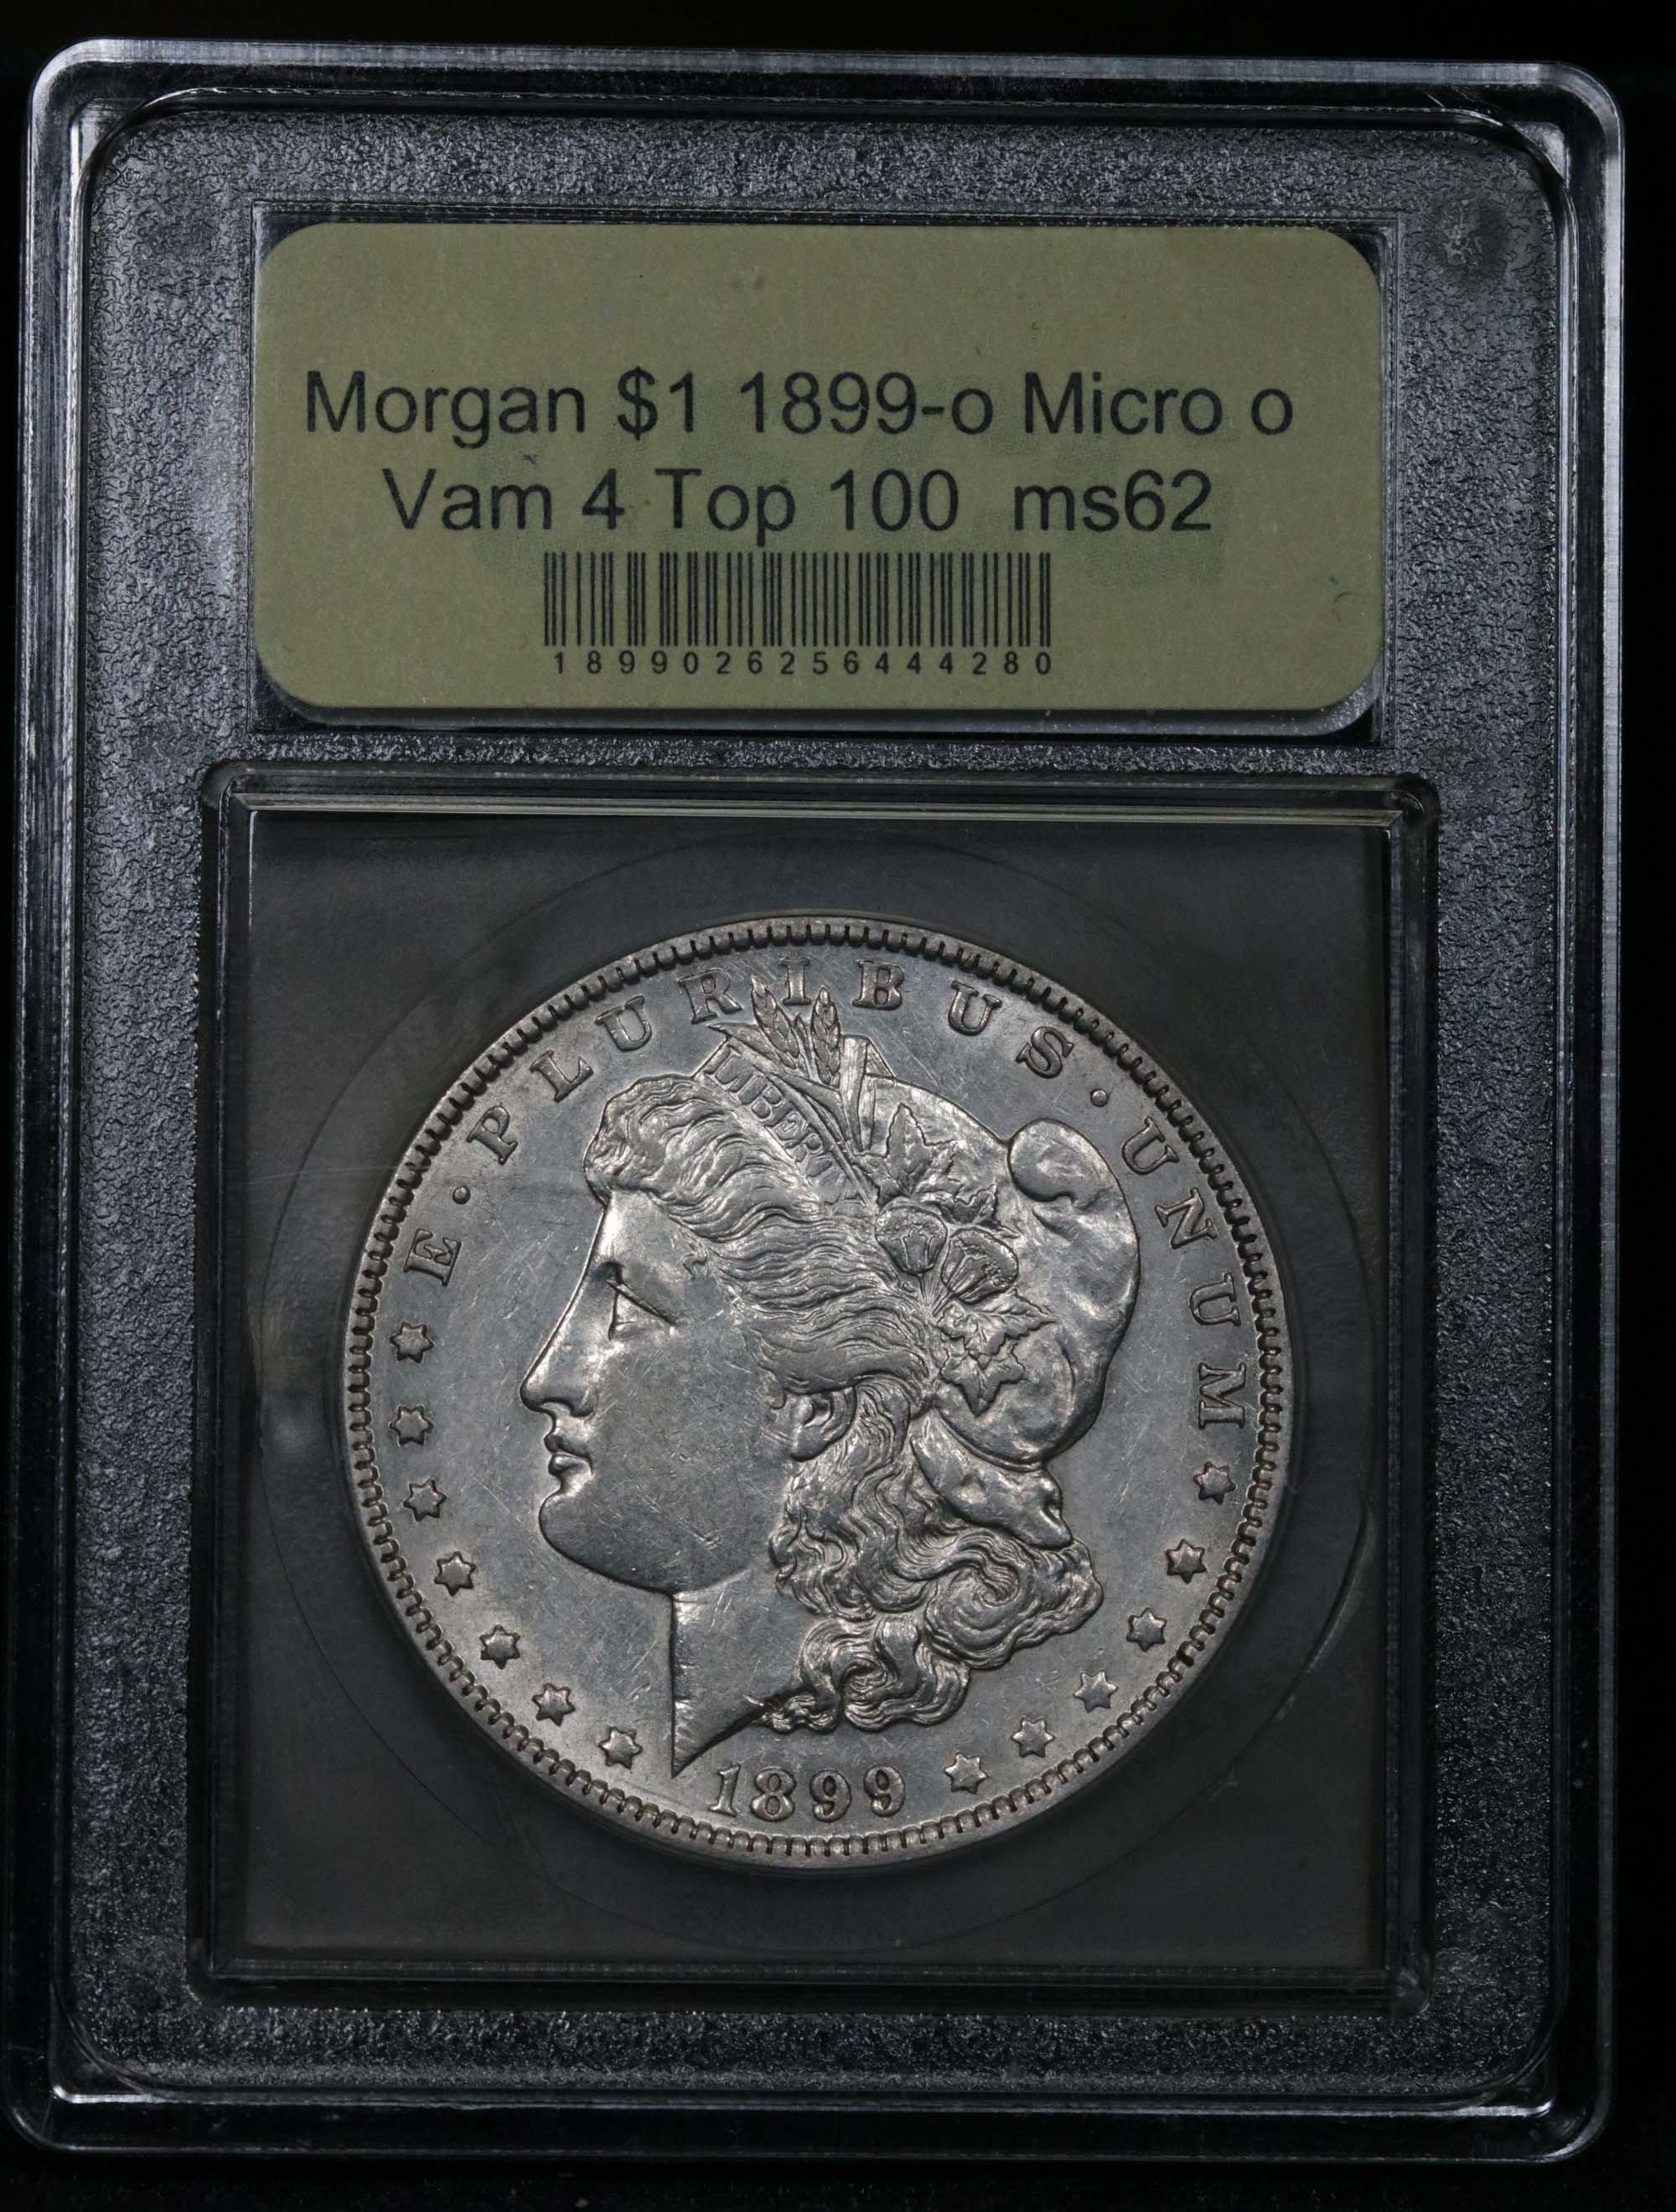 ***Auction Highlight*** 1899-o Micro o Vam 4 Top 100 Morgan Dollar $1 Graded Select Unc by USCG (fc)